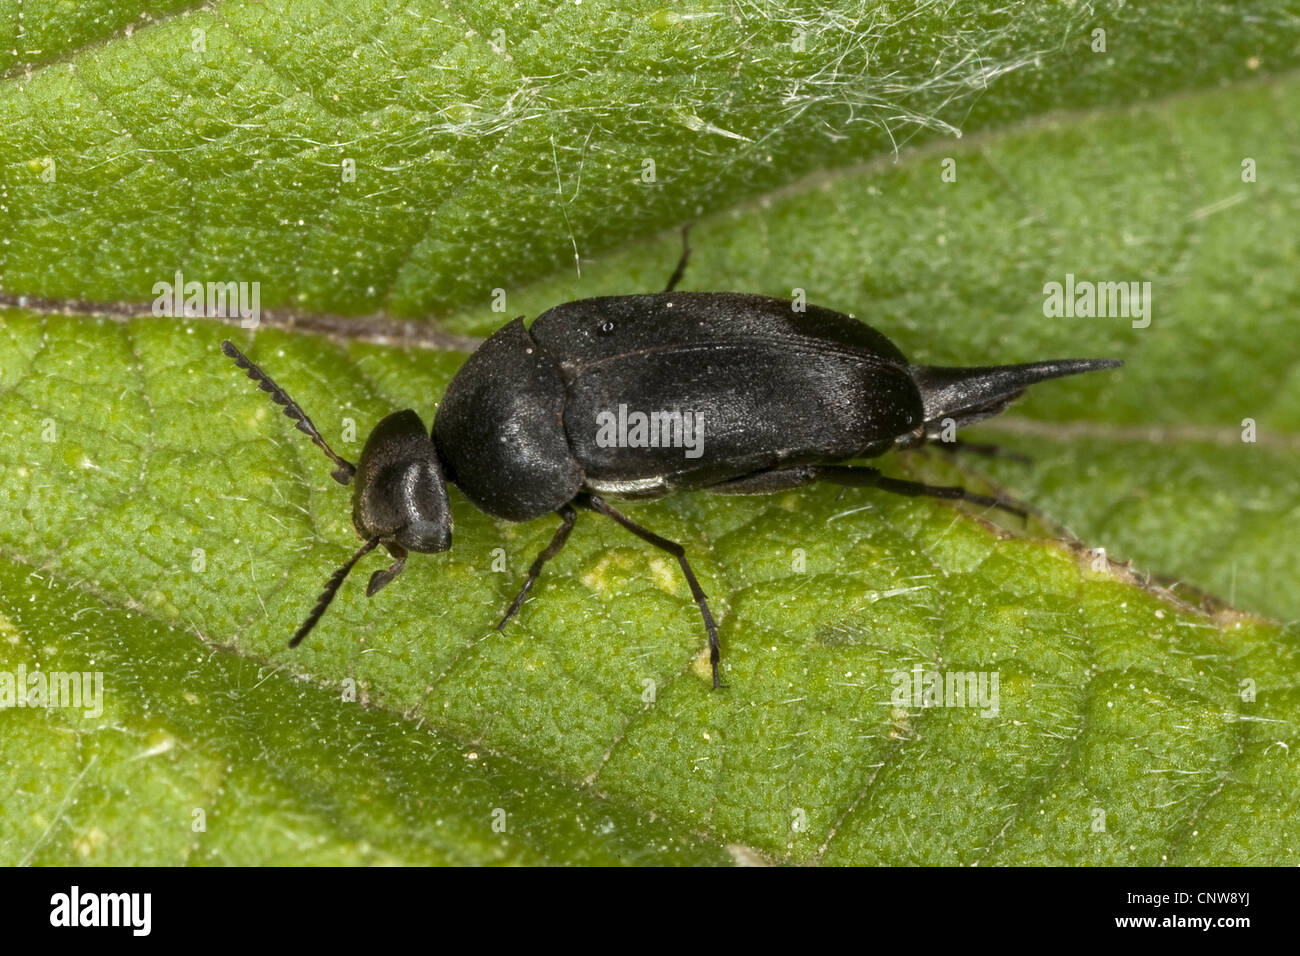 tumbling flower beetles (Mordella spec.), sitting on a leaf, Germany Stock Photo